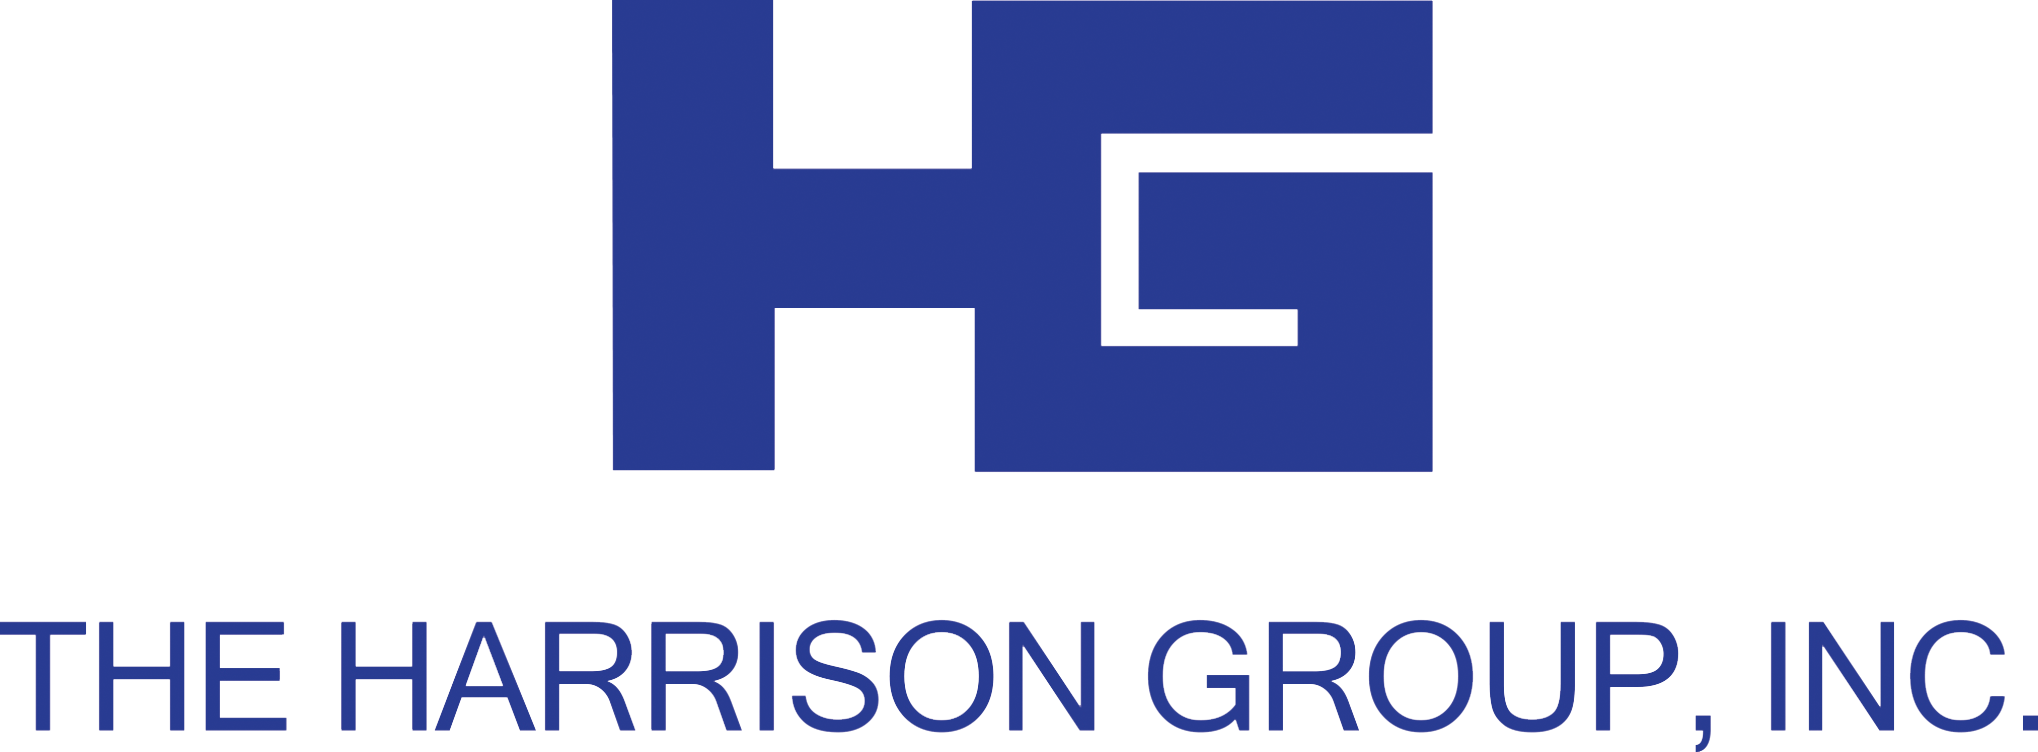 The Harrison Group, Inc.